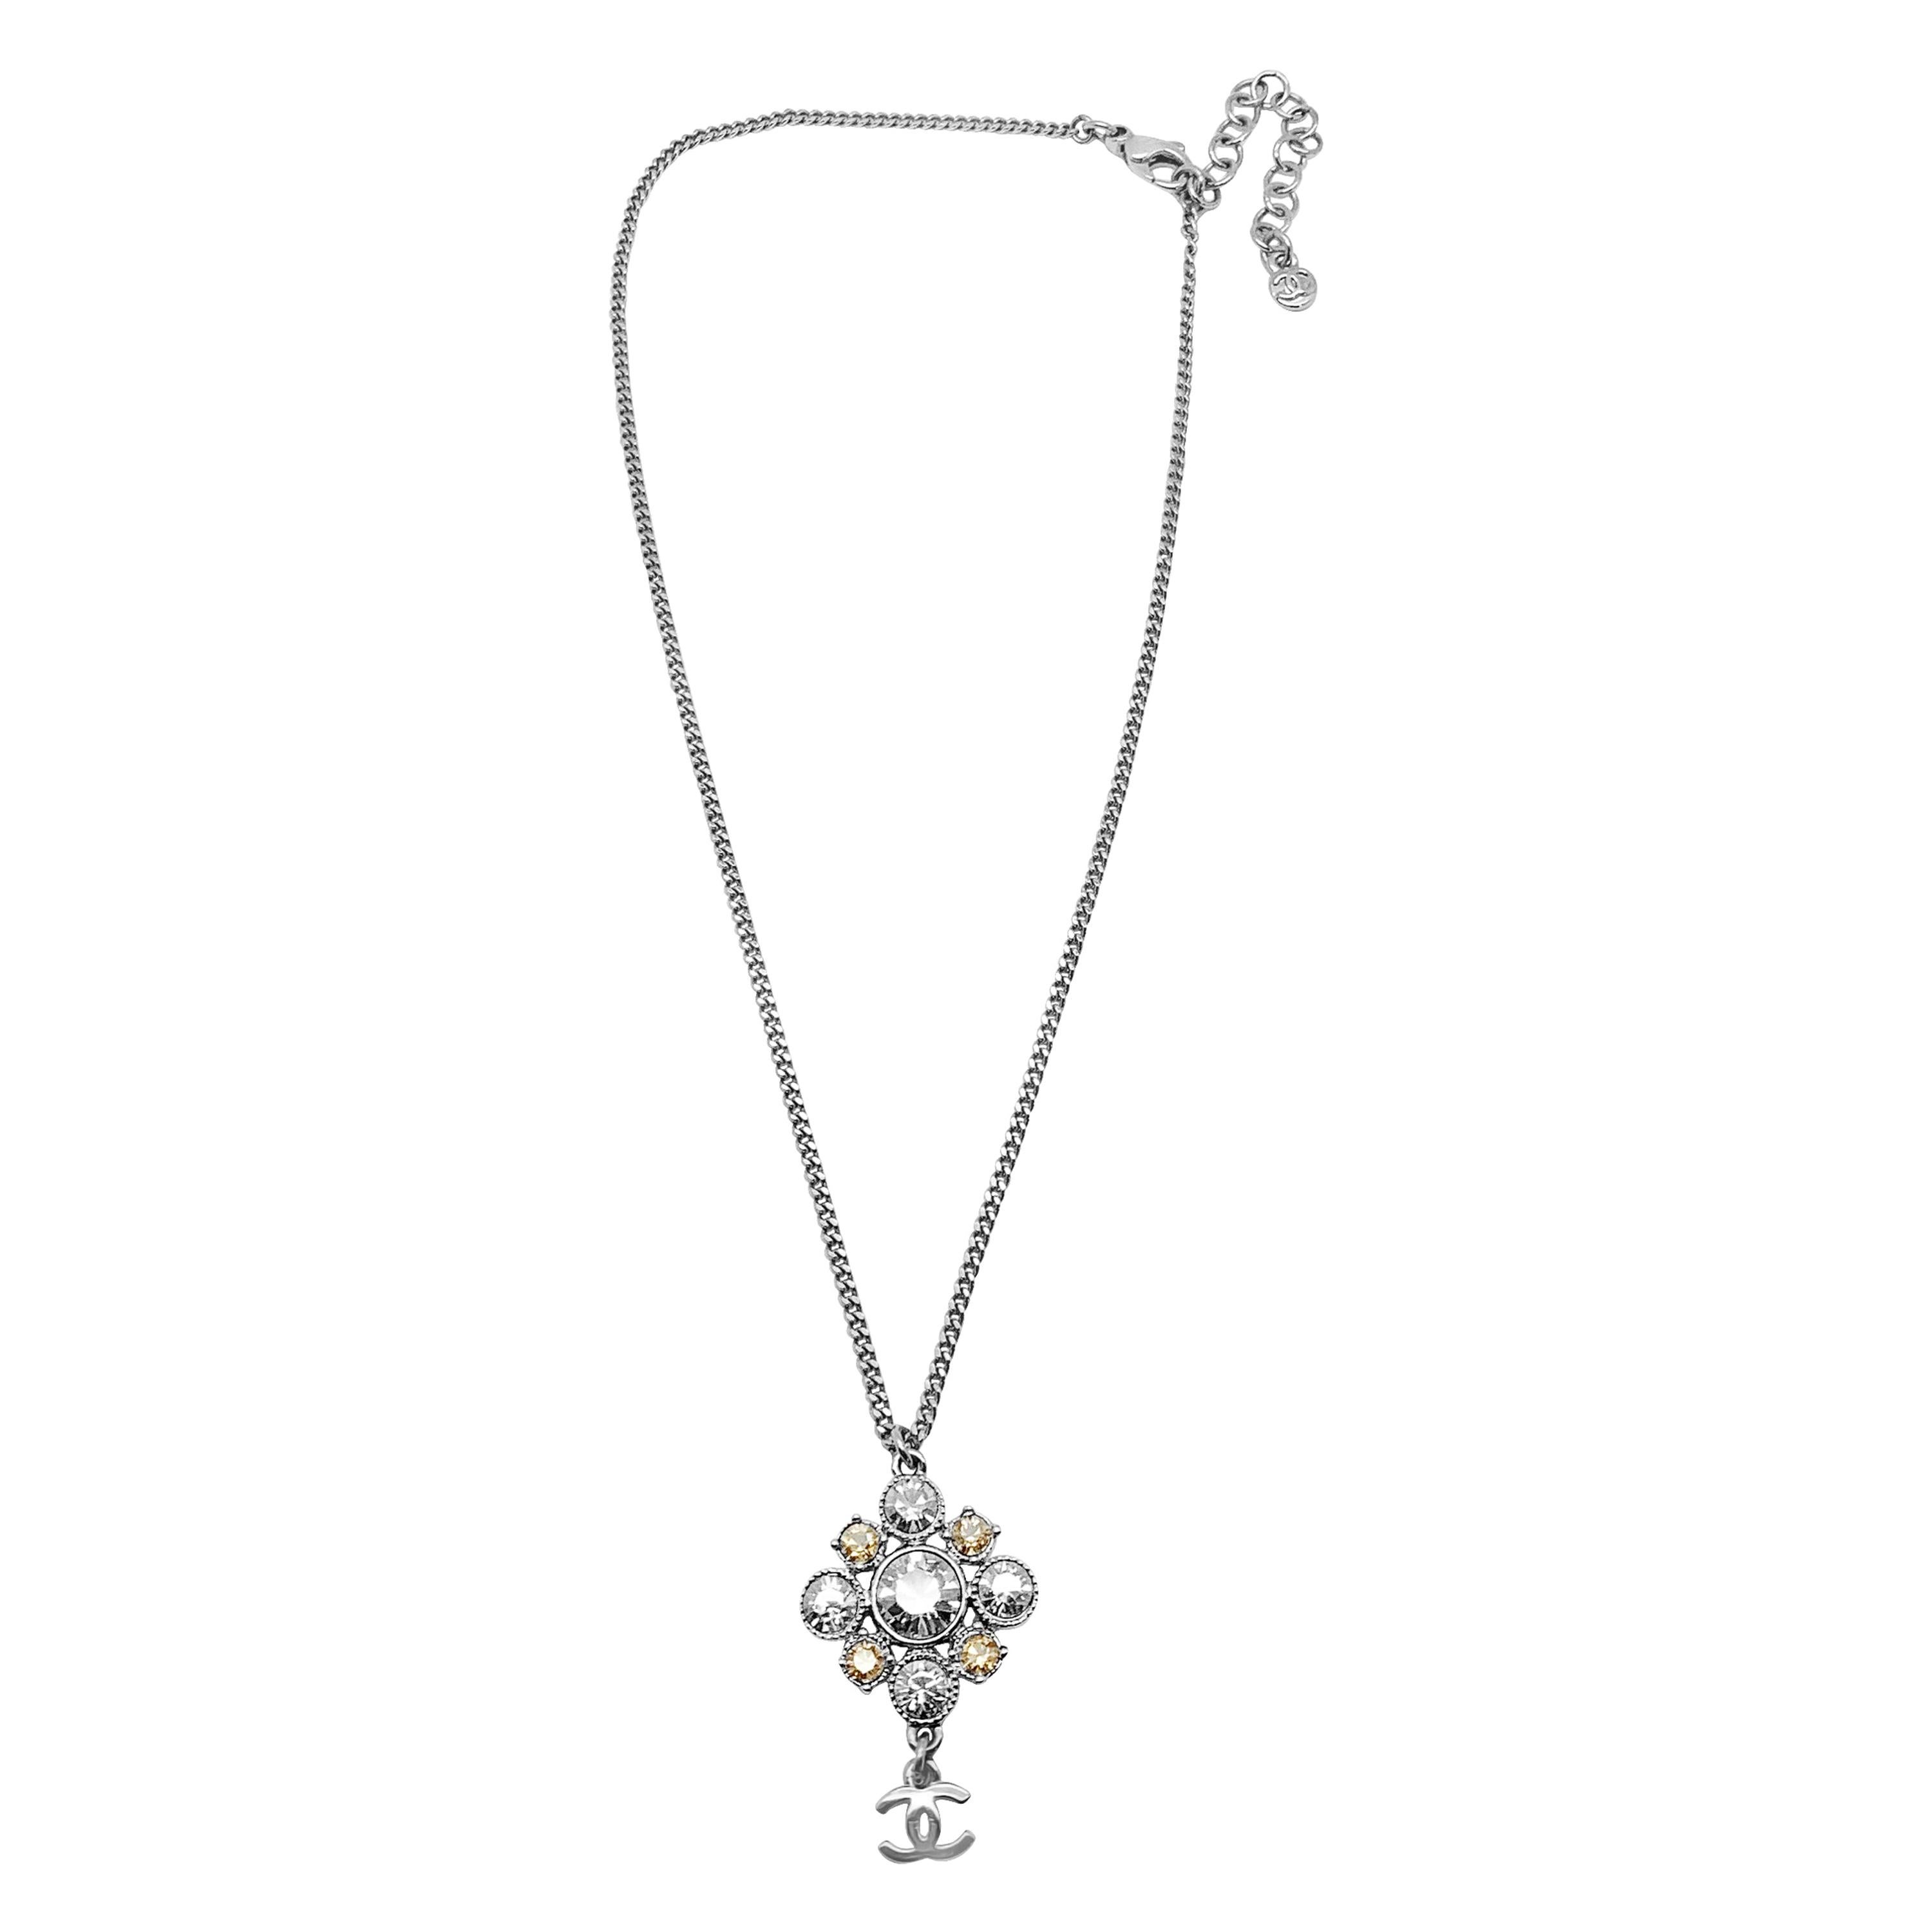 Buy Rare Chanel Button Pendant Designer Jewelry Necklace Charm